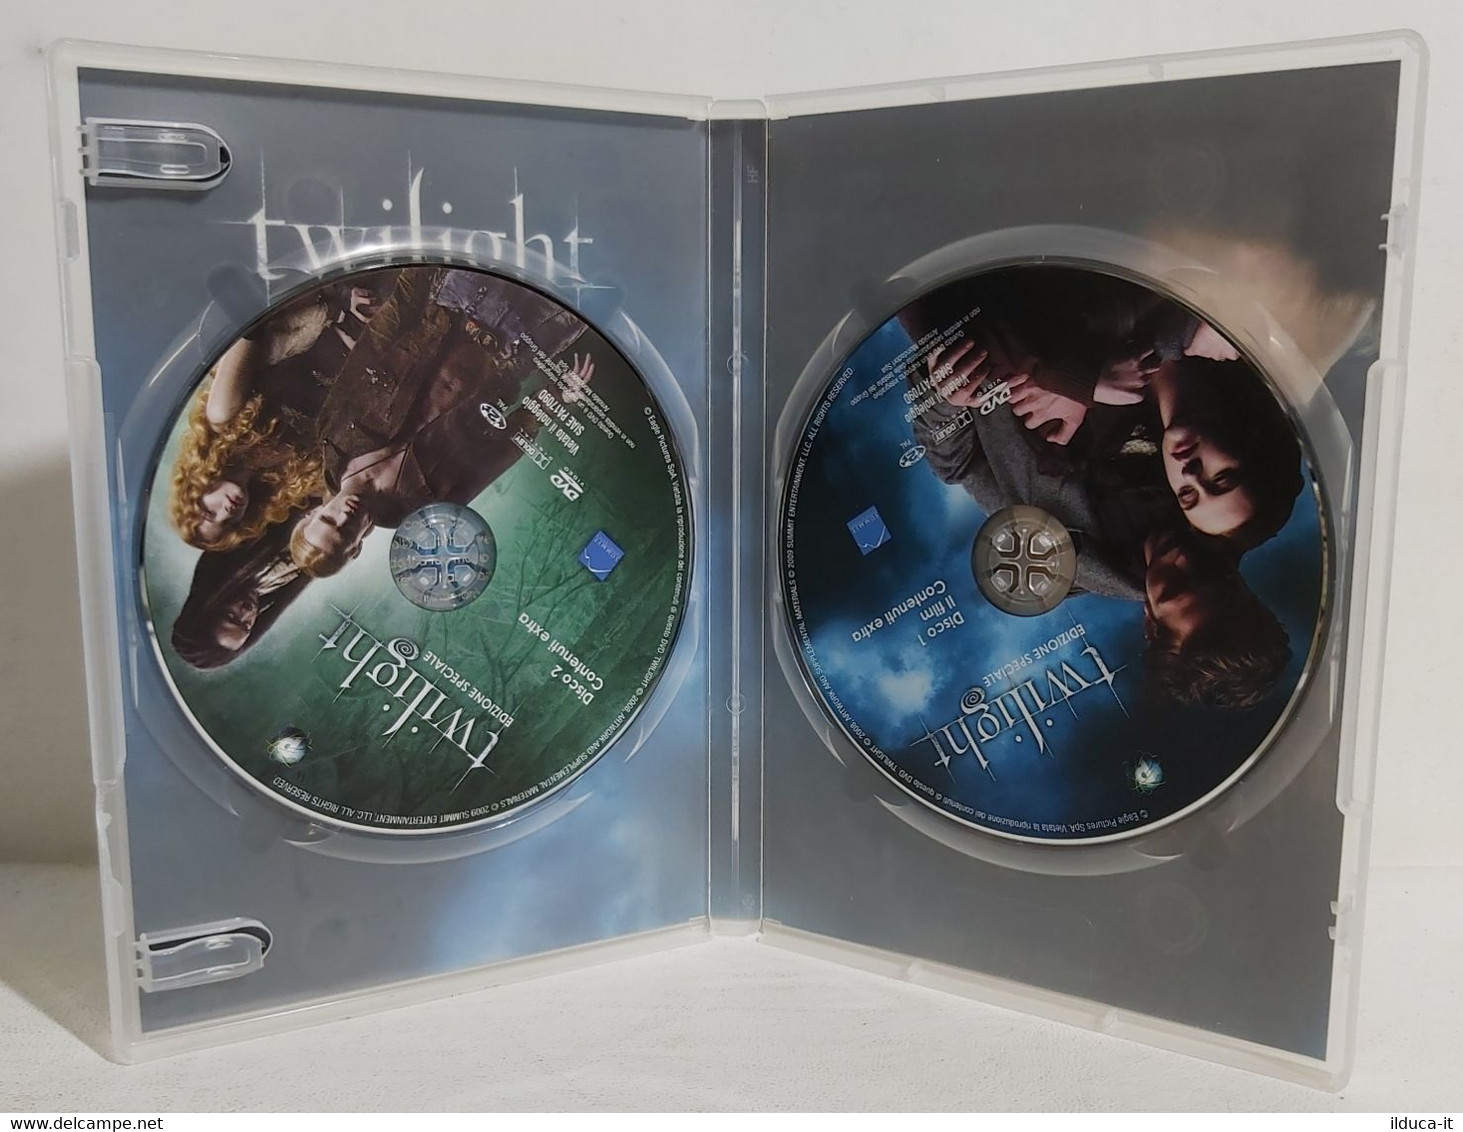 I103837 DVD Edizione Speciale 2 Dischi - TWILIGHT (2008) - Kristen Stewart - Sciences-Fictions Et Fantaisie